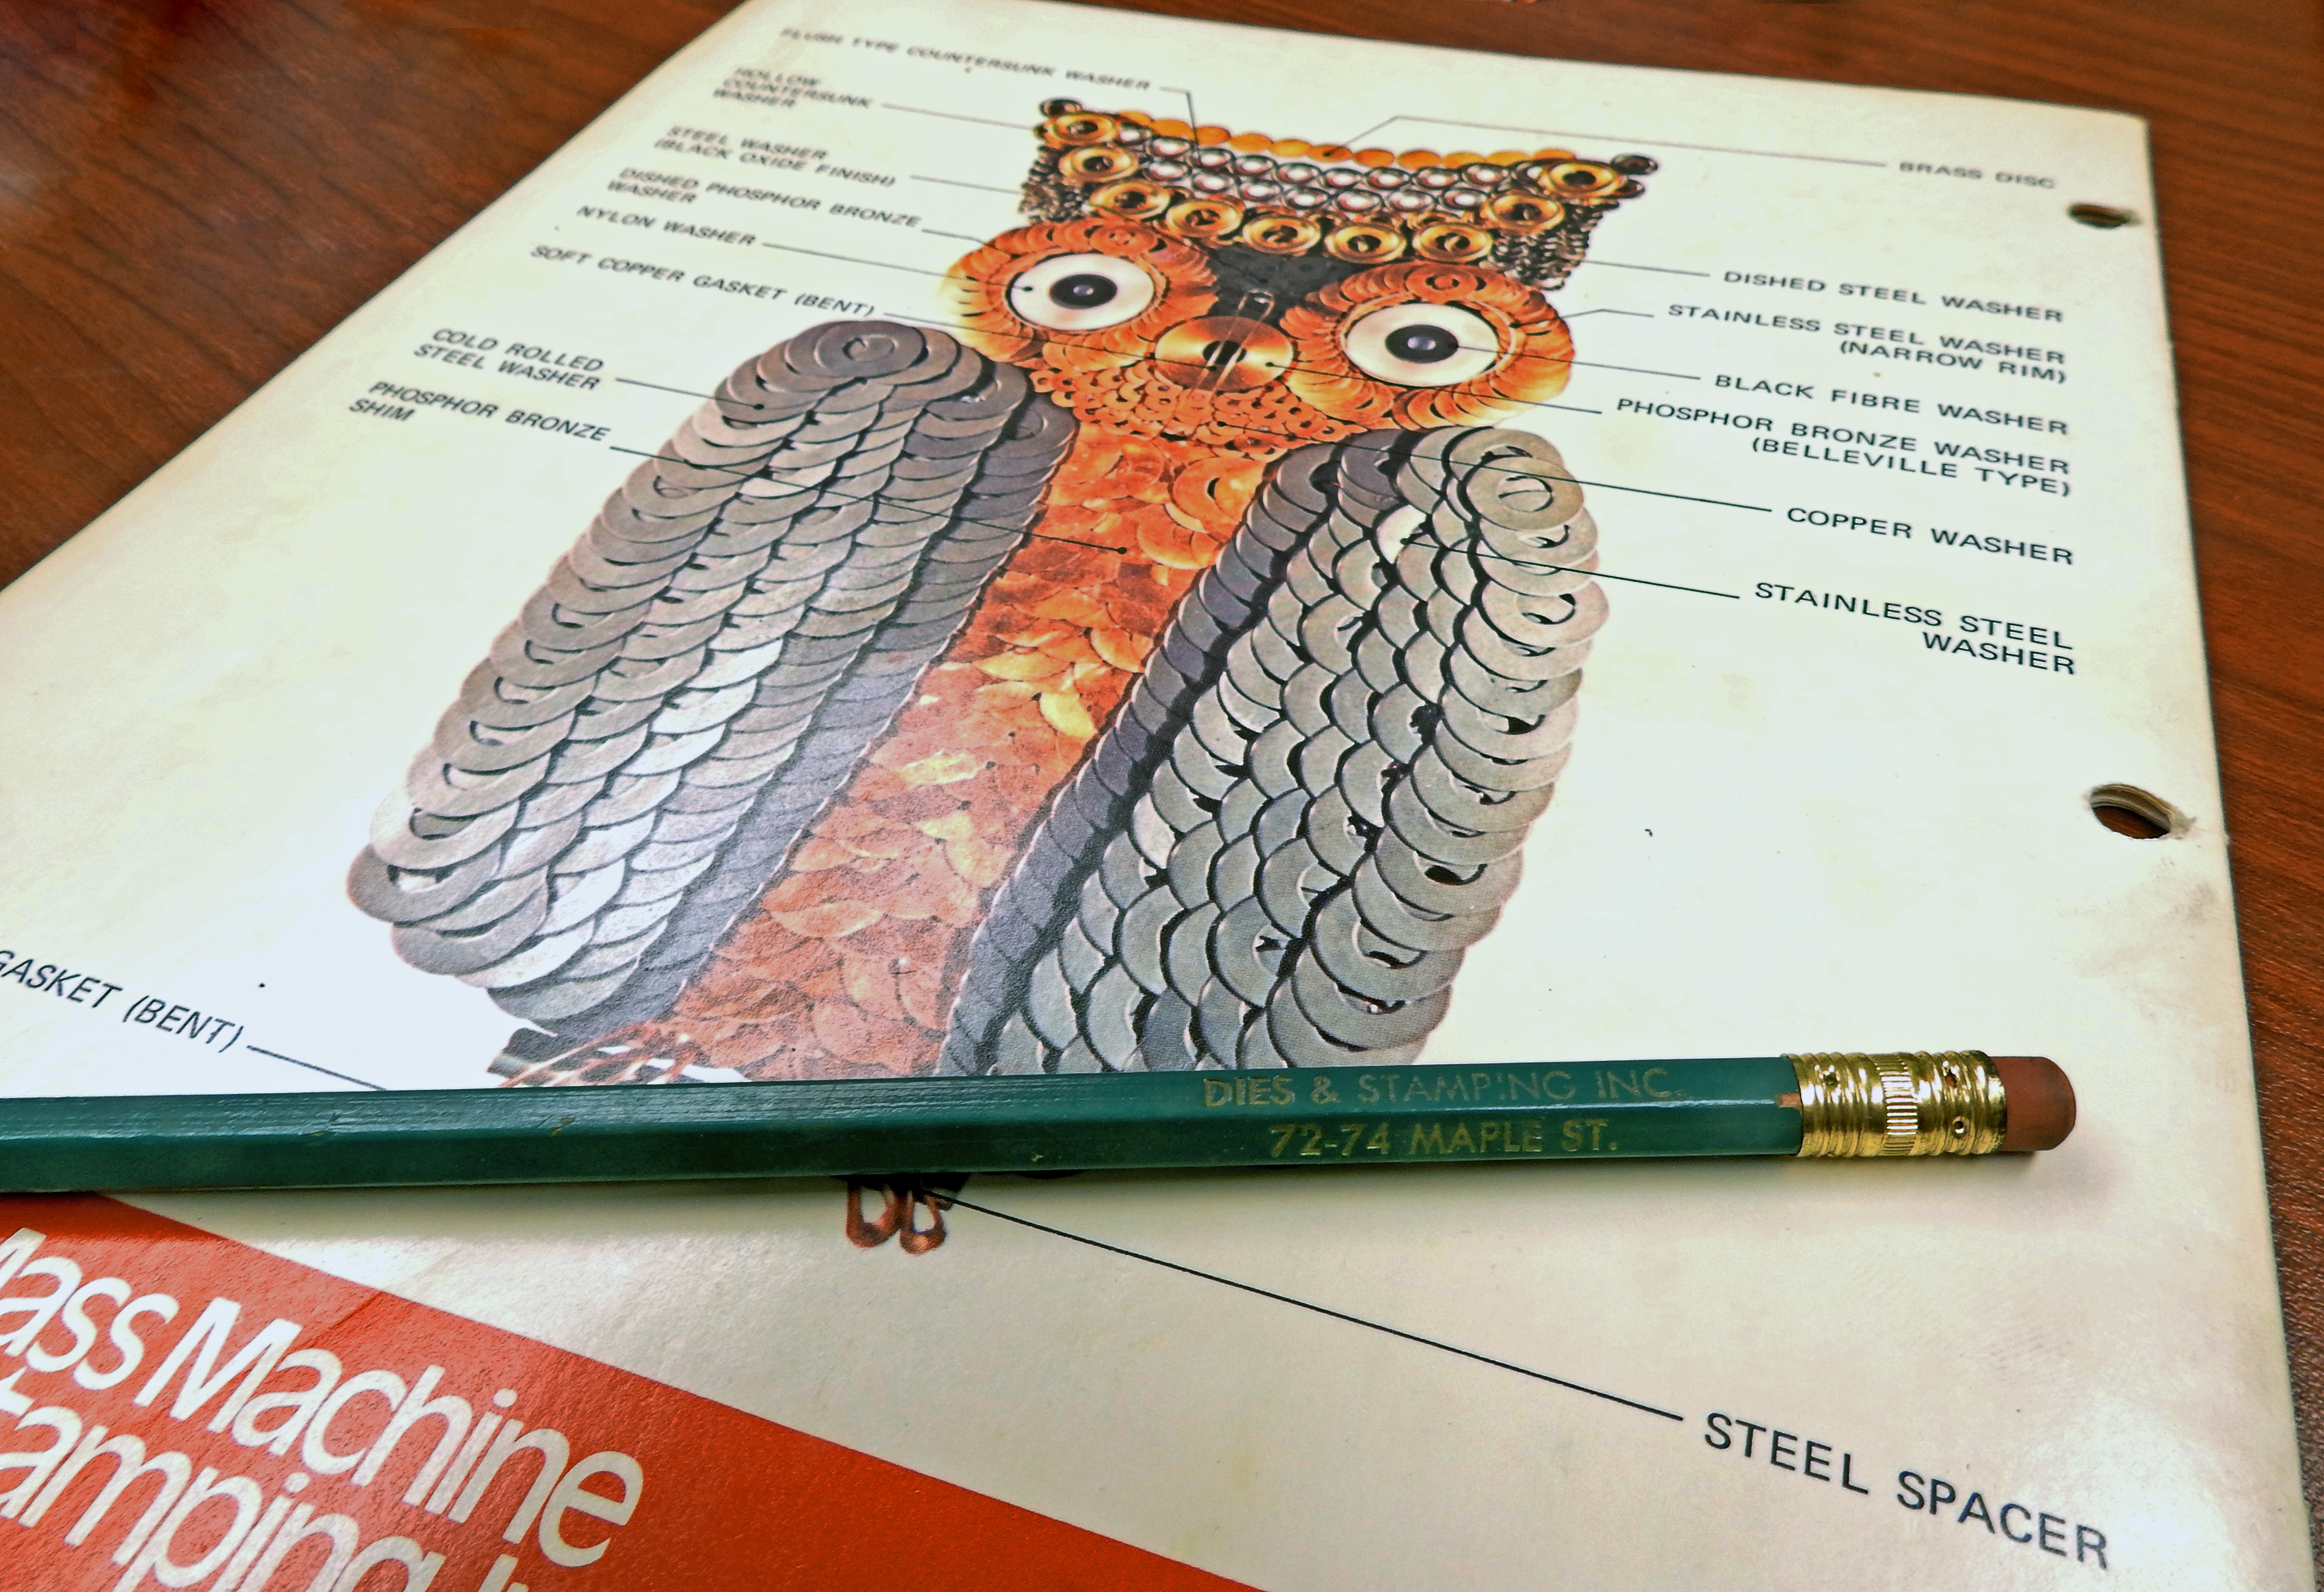 Owl-catalog-withPencil2.jpg